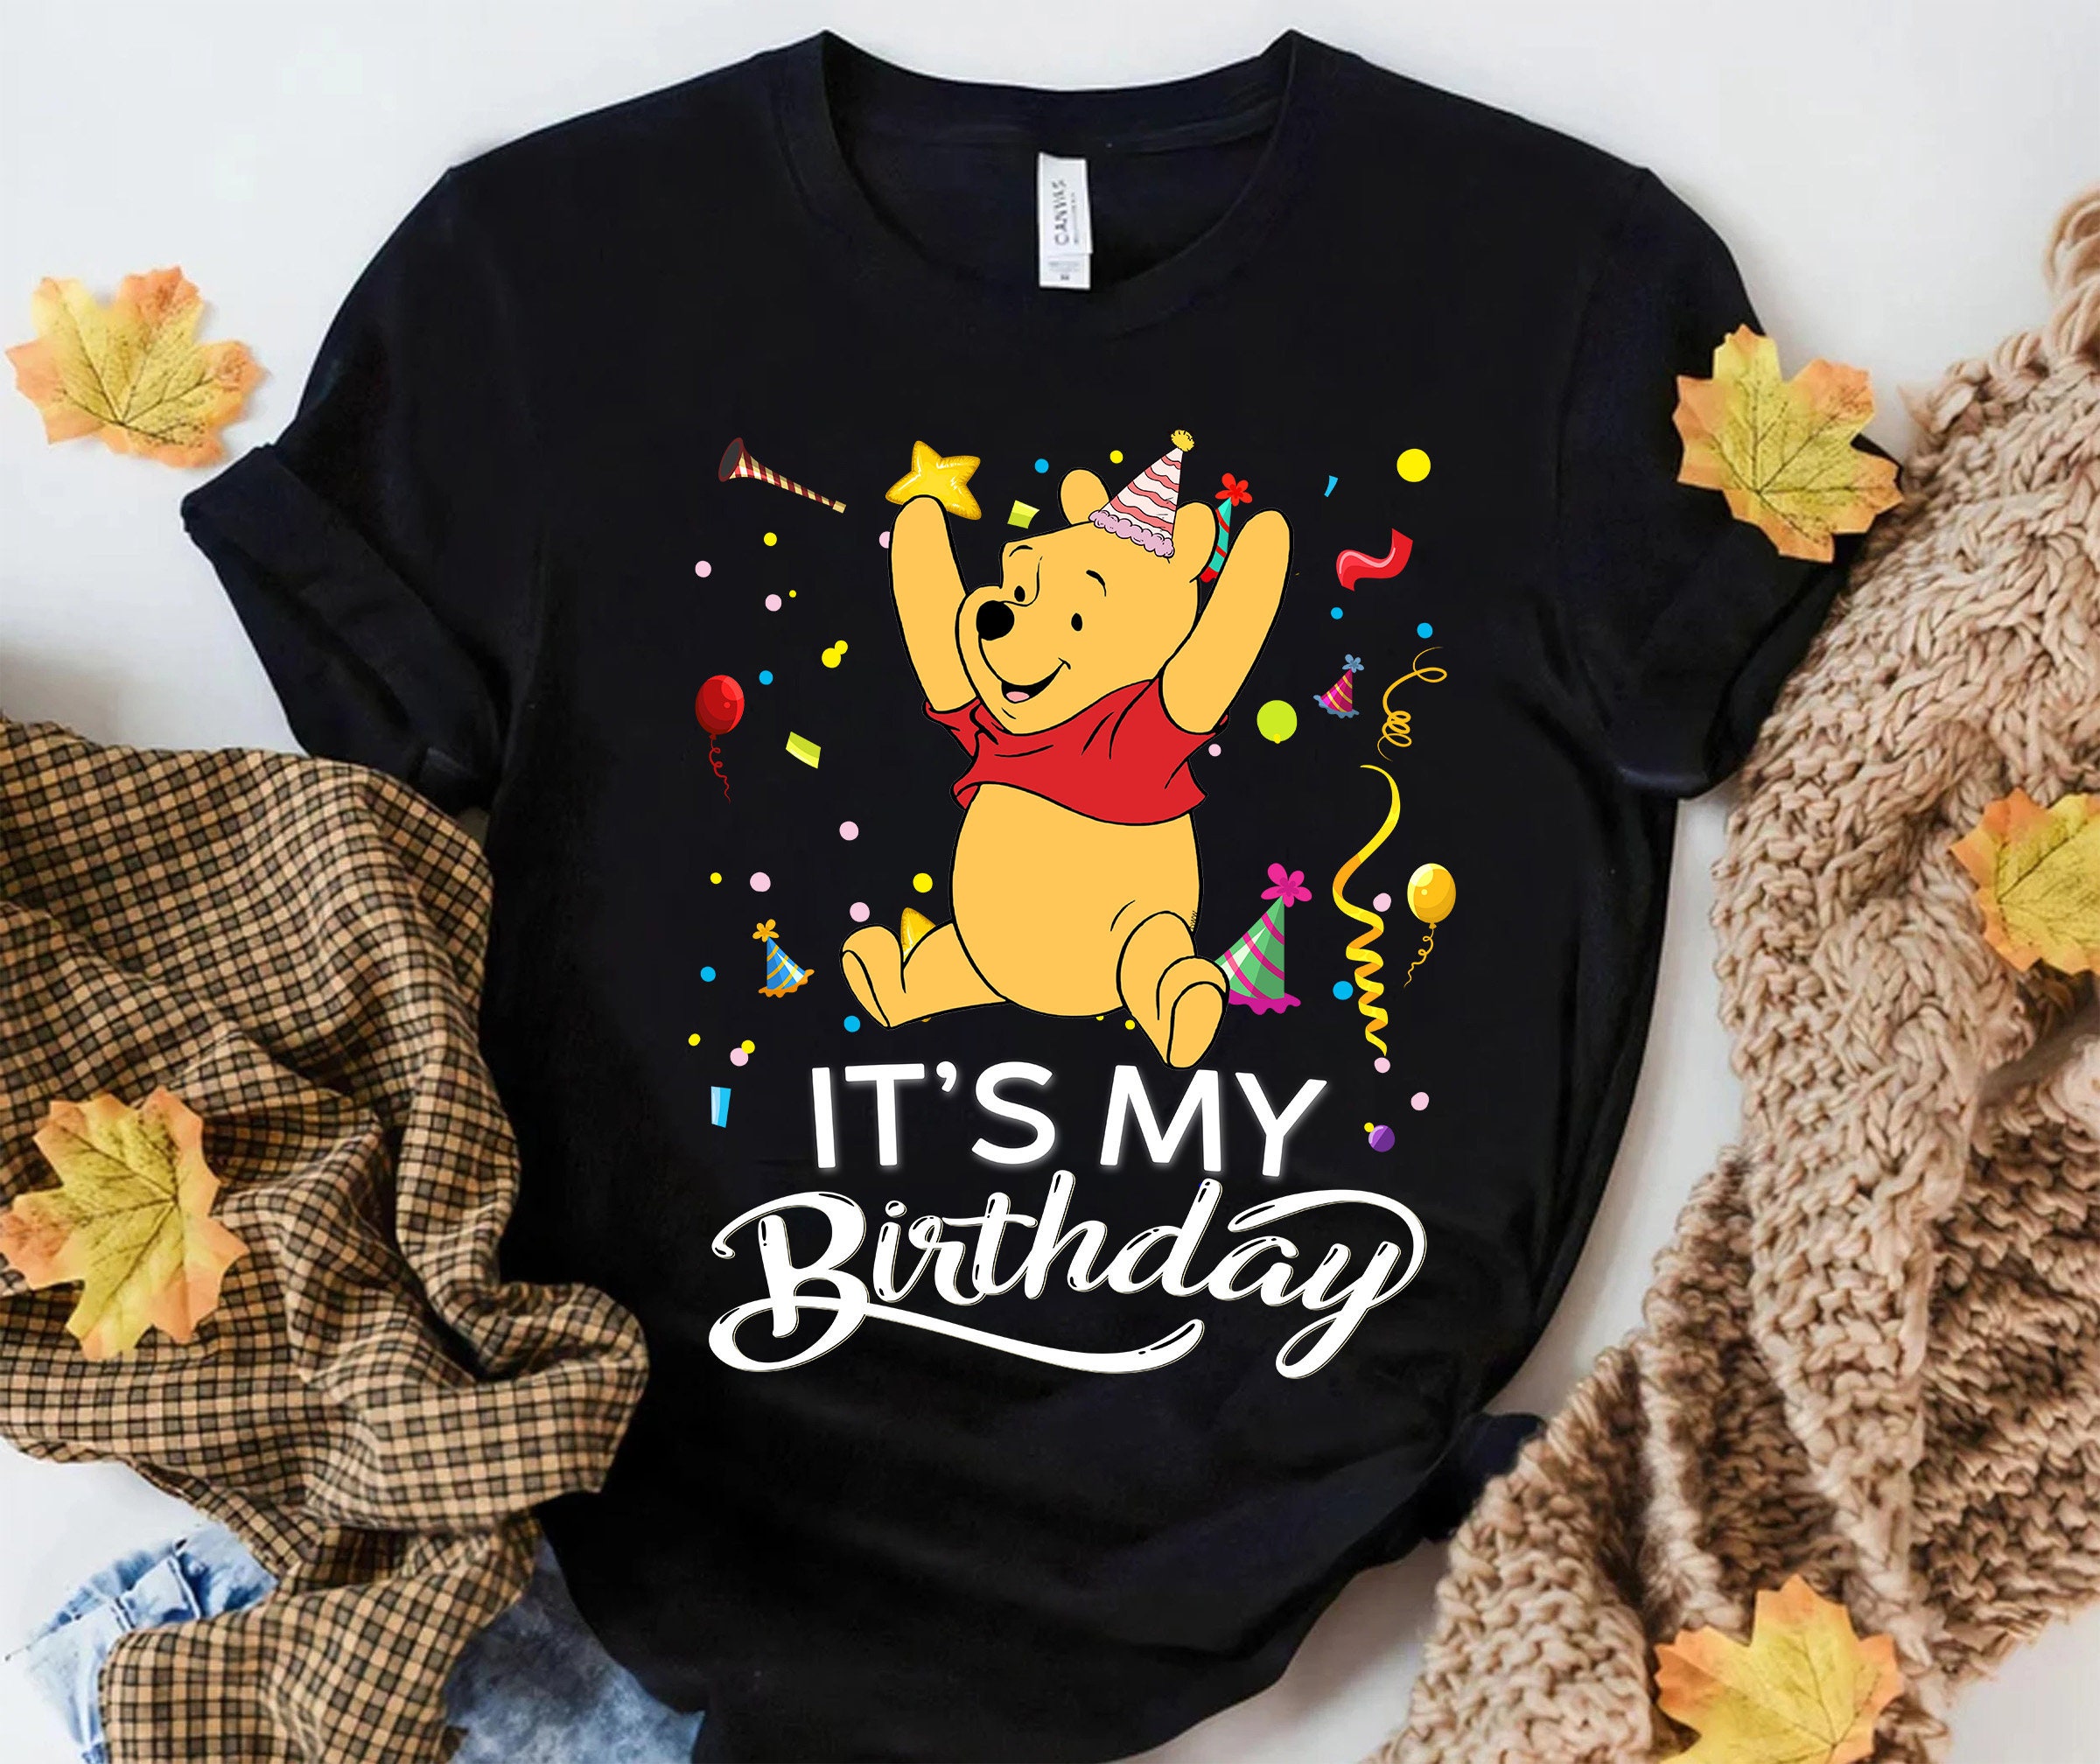 Pooh Shirt Toddler - Etsy the Winnie